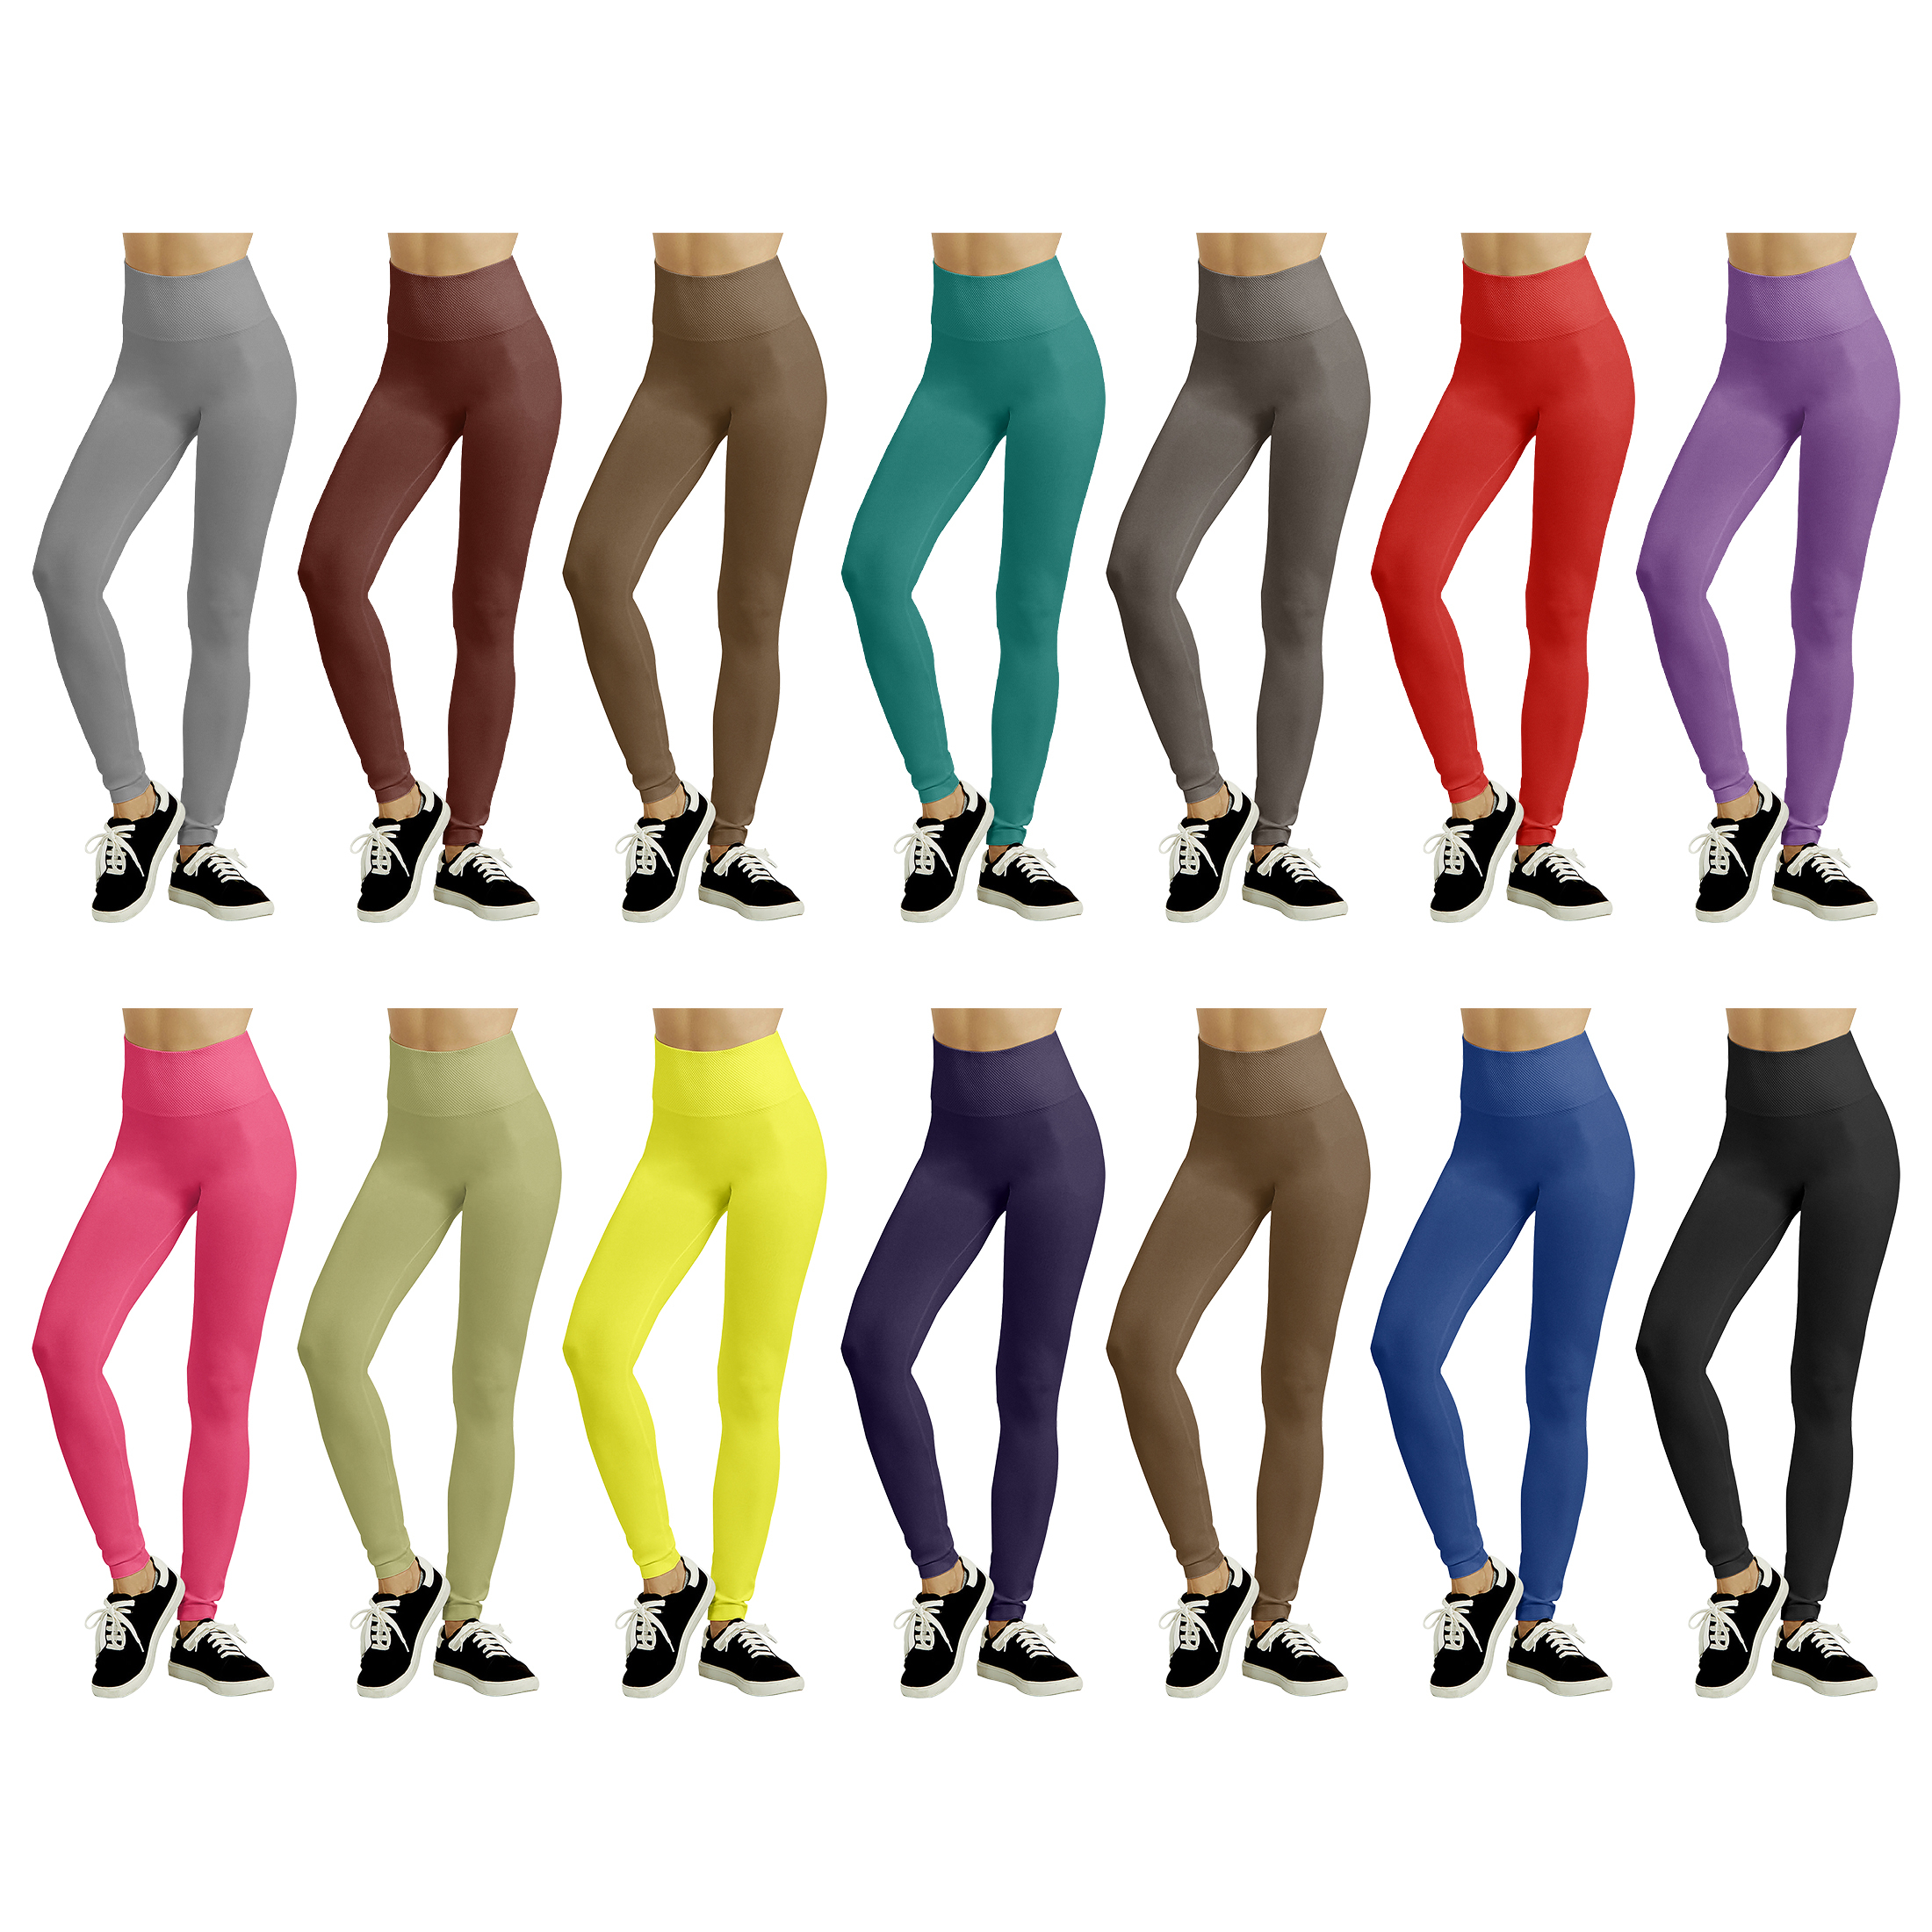 Women's Tummy Control Textured High Waist Workout Yoga Pants Leggings - Coffee, Large/X-Large